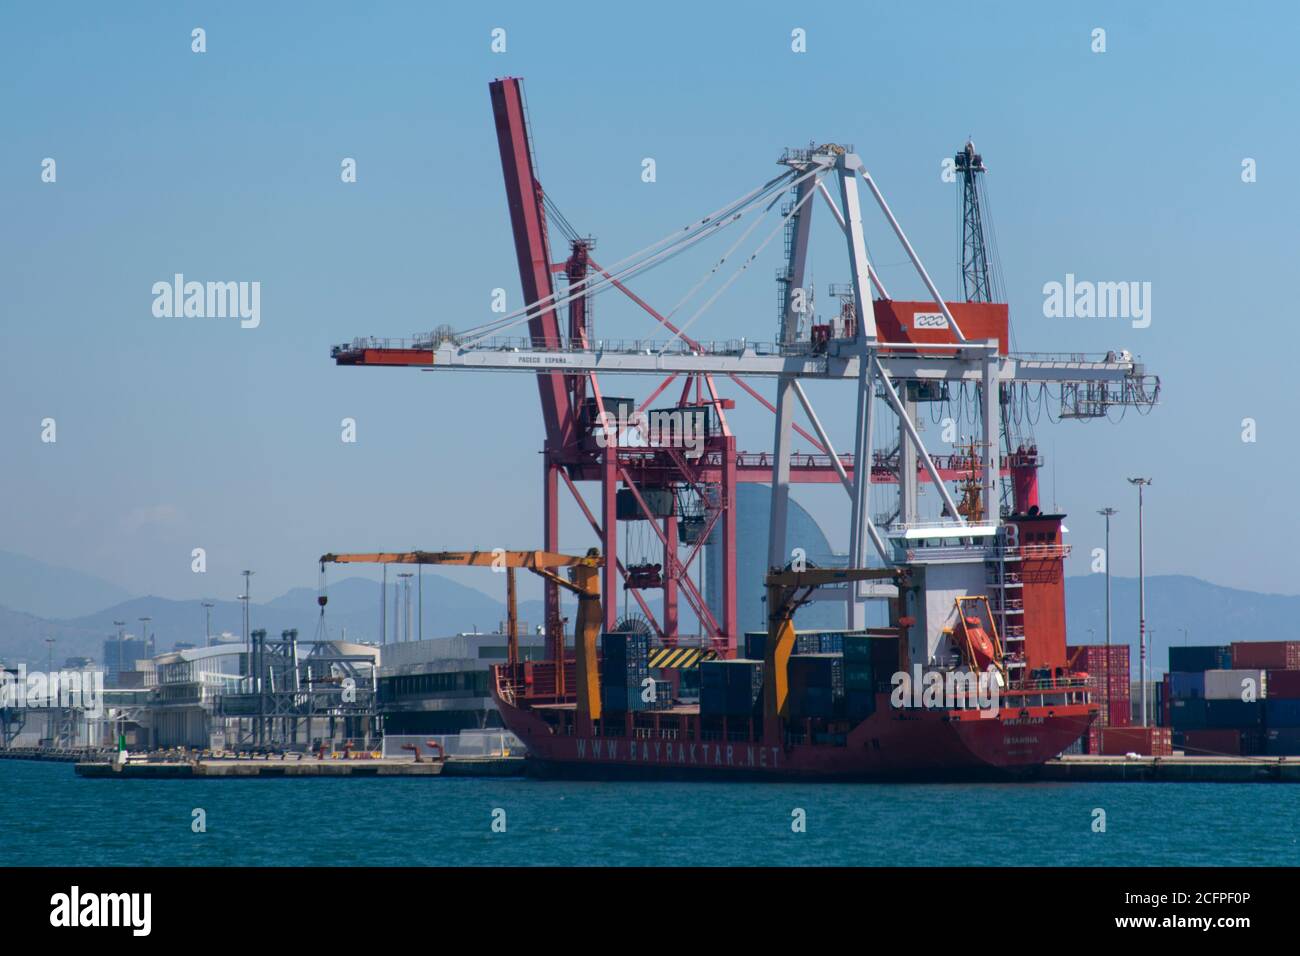 Container ship Akishar of the Bayraktar company docked in the port of Barcelona on July 19, 2020. Stock Photo